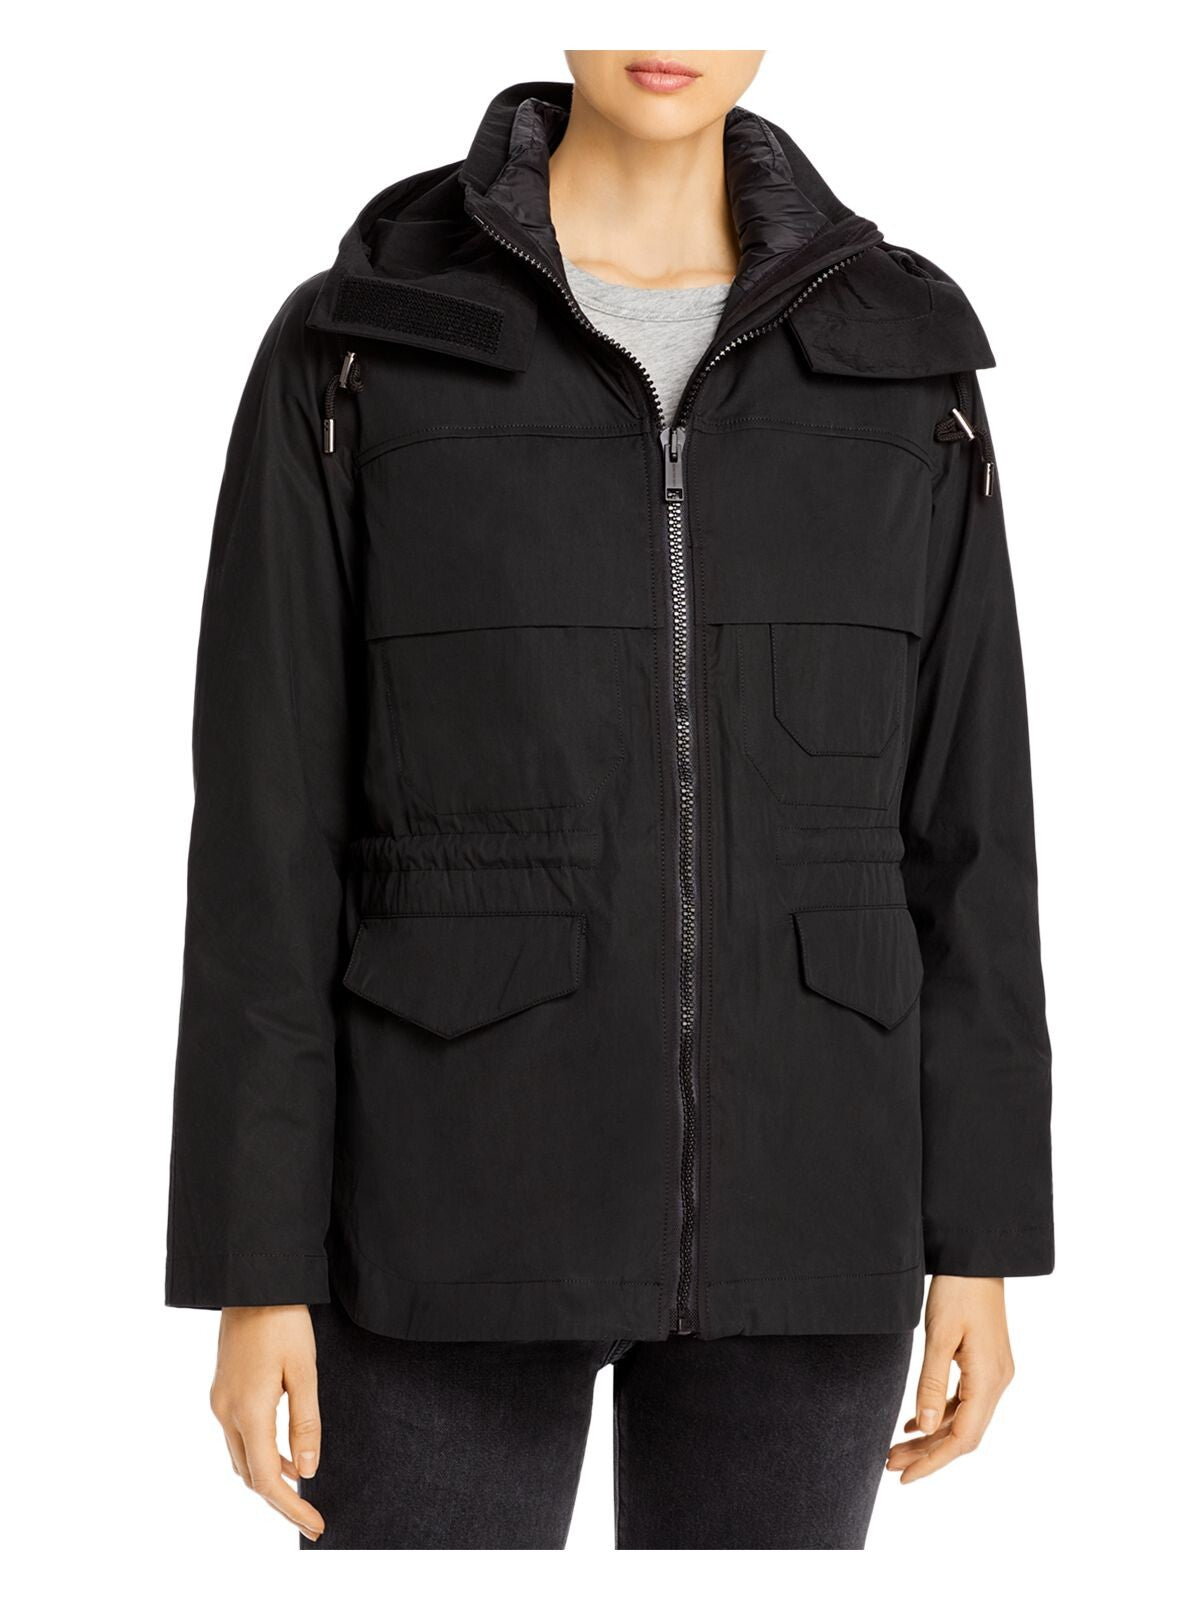 YS ARMY Womens Black Parka Winter Jacket Coat 36